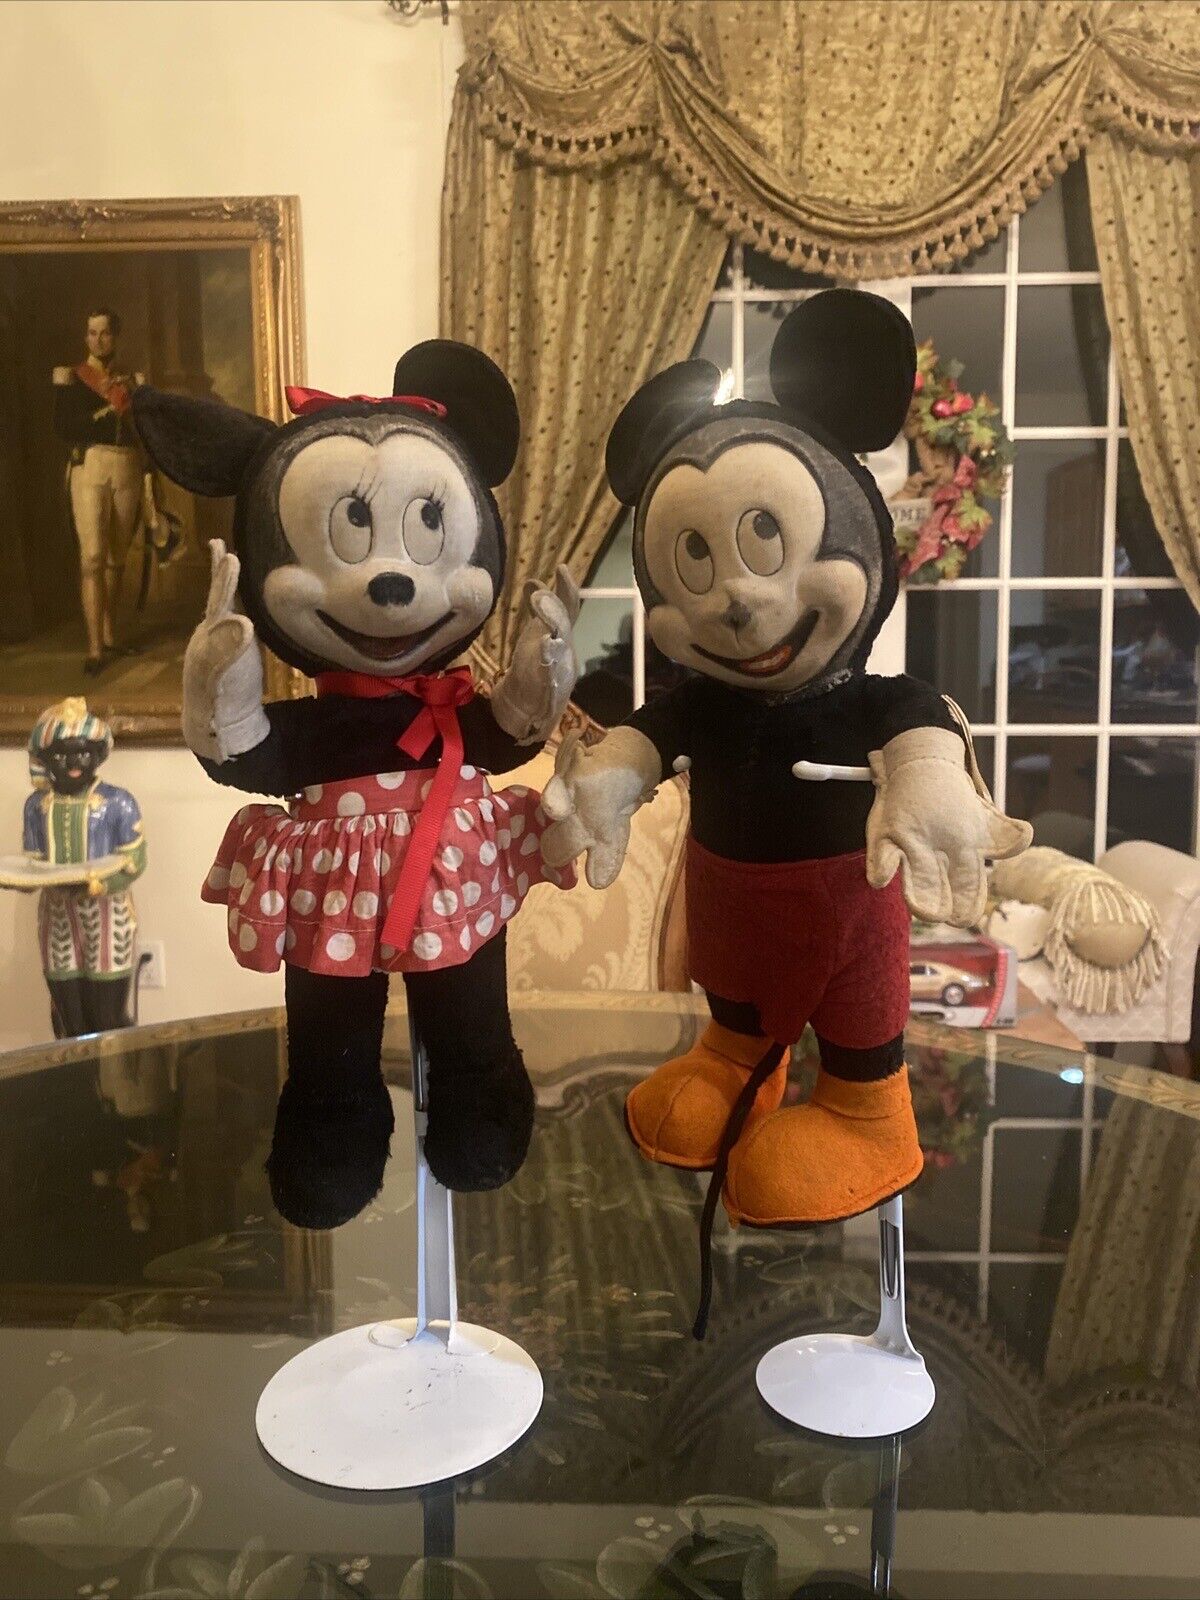 Mickey & Minnie Mouse Plush Dolls By Gund 1940’s Walt Disney Productions